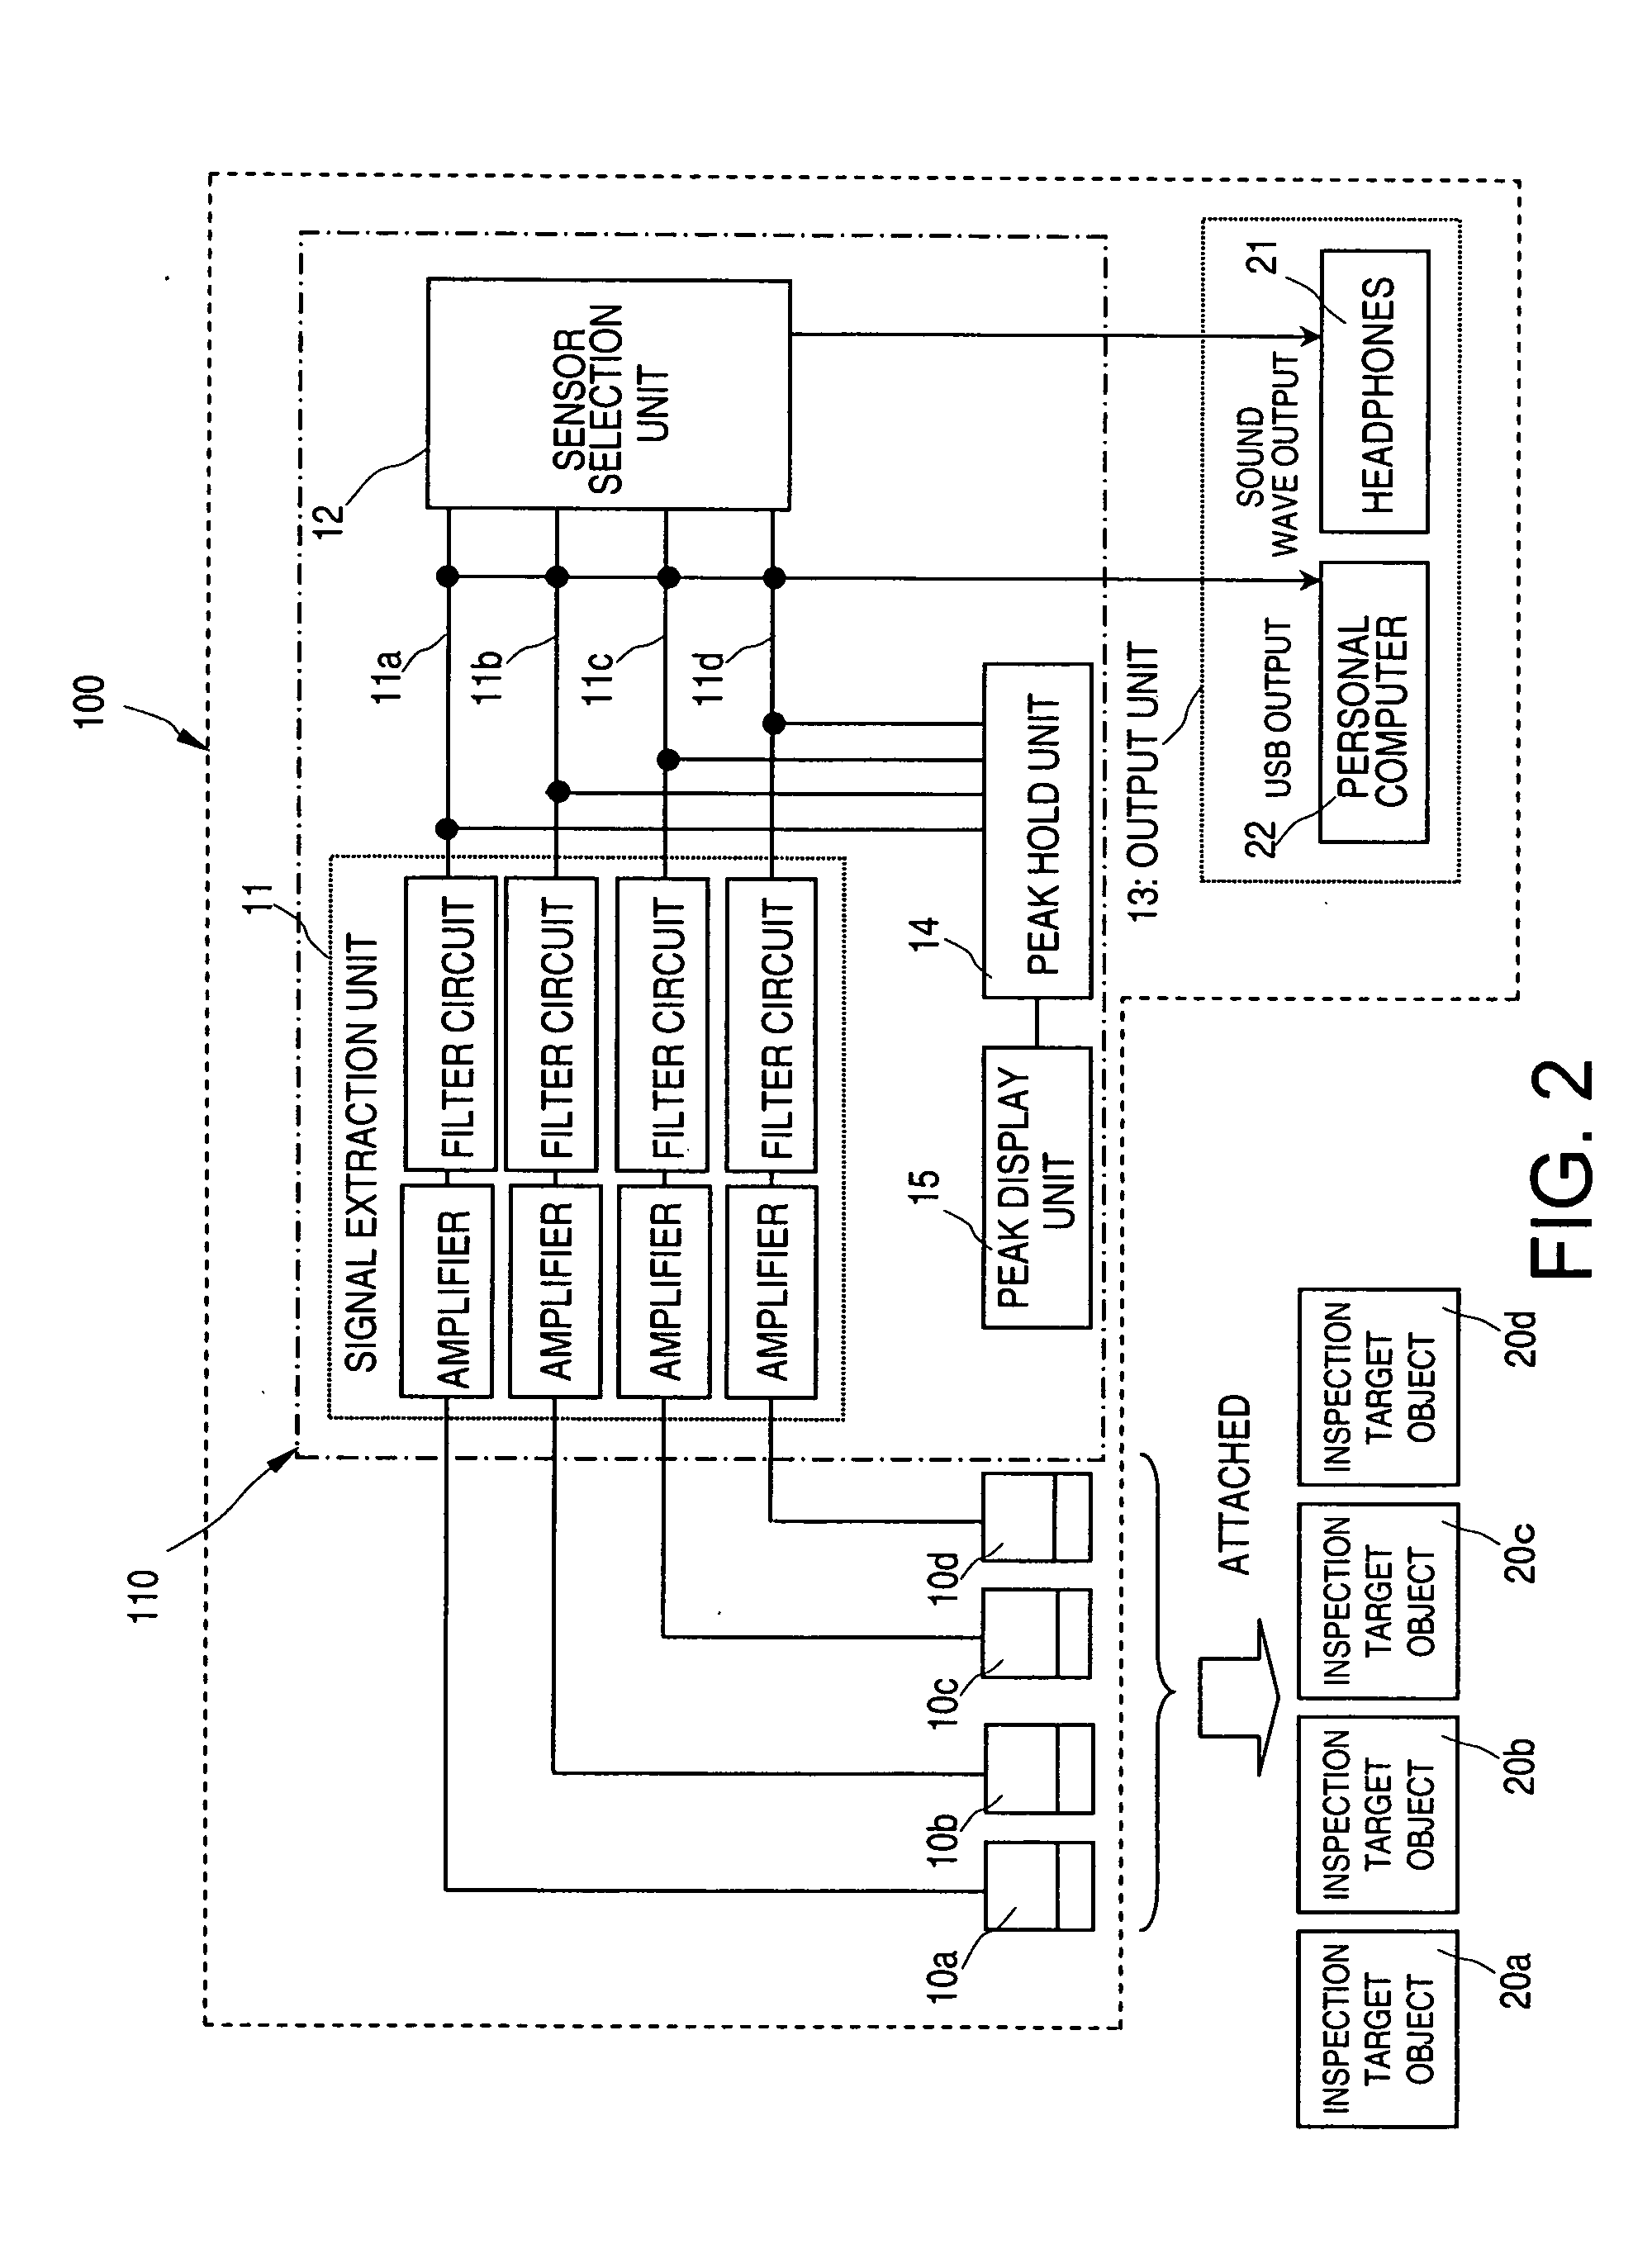 Abnormal noise correction verification apparatus